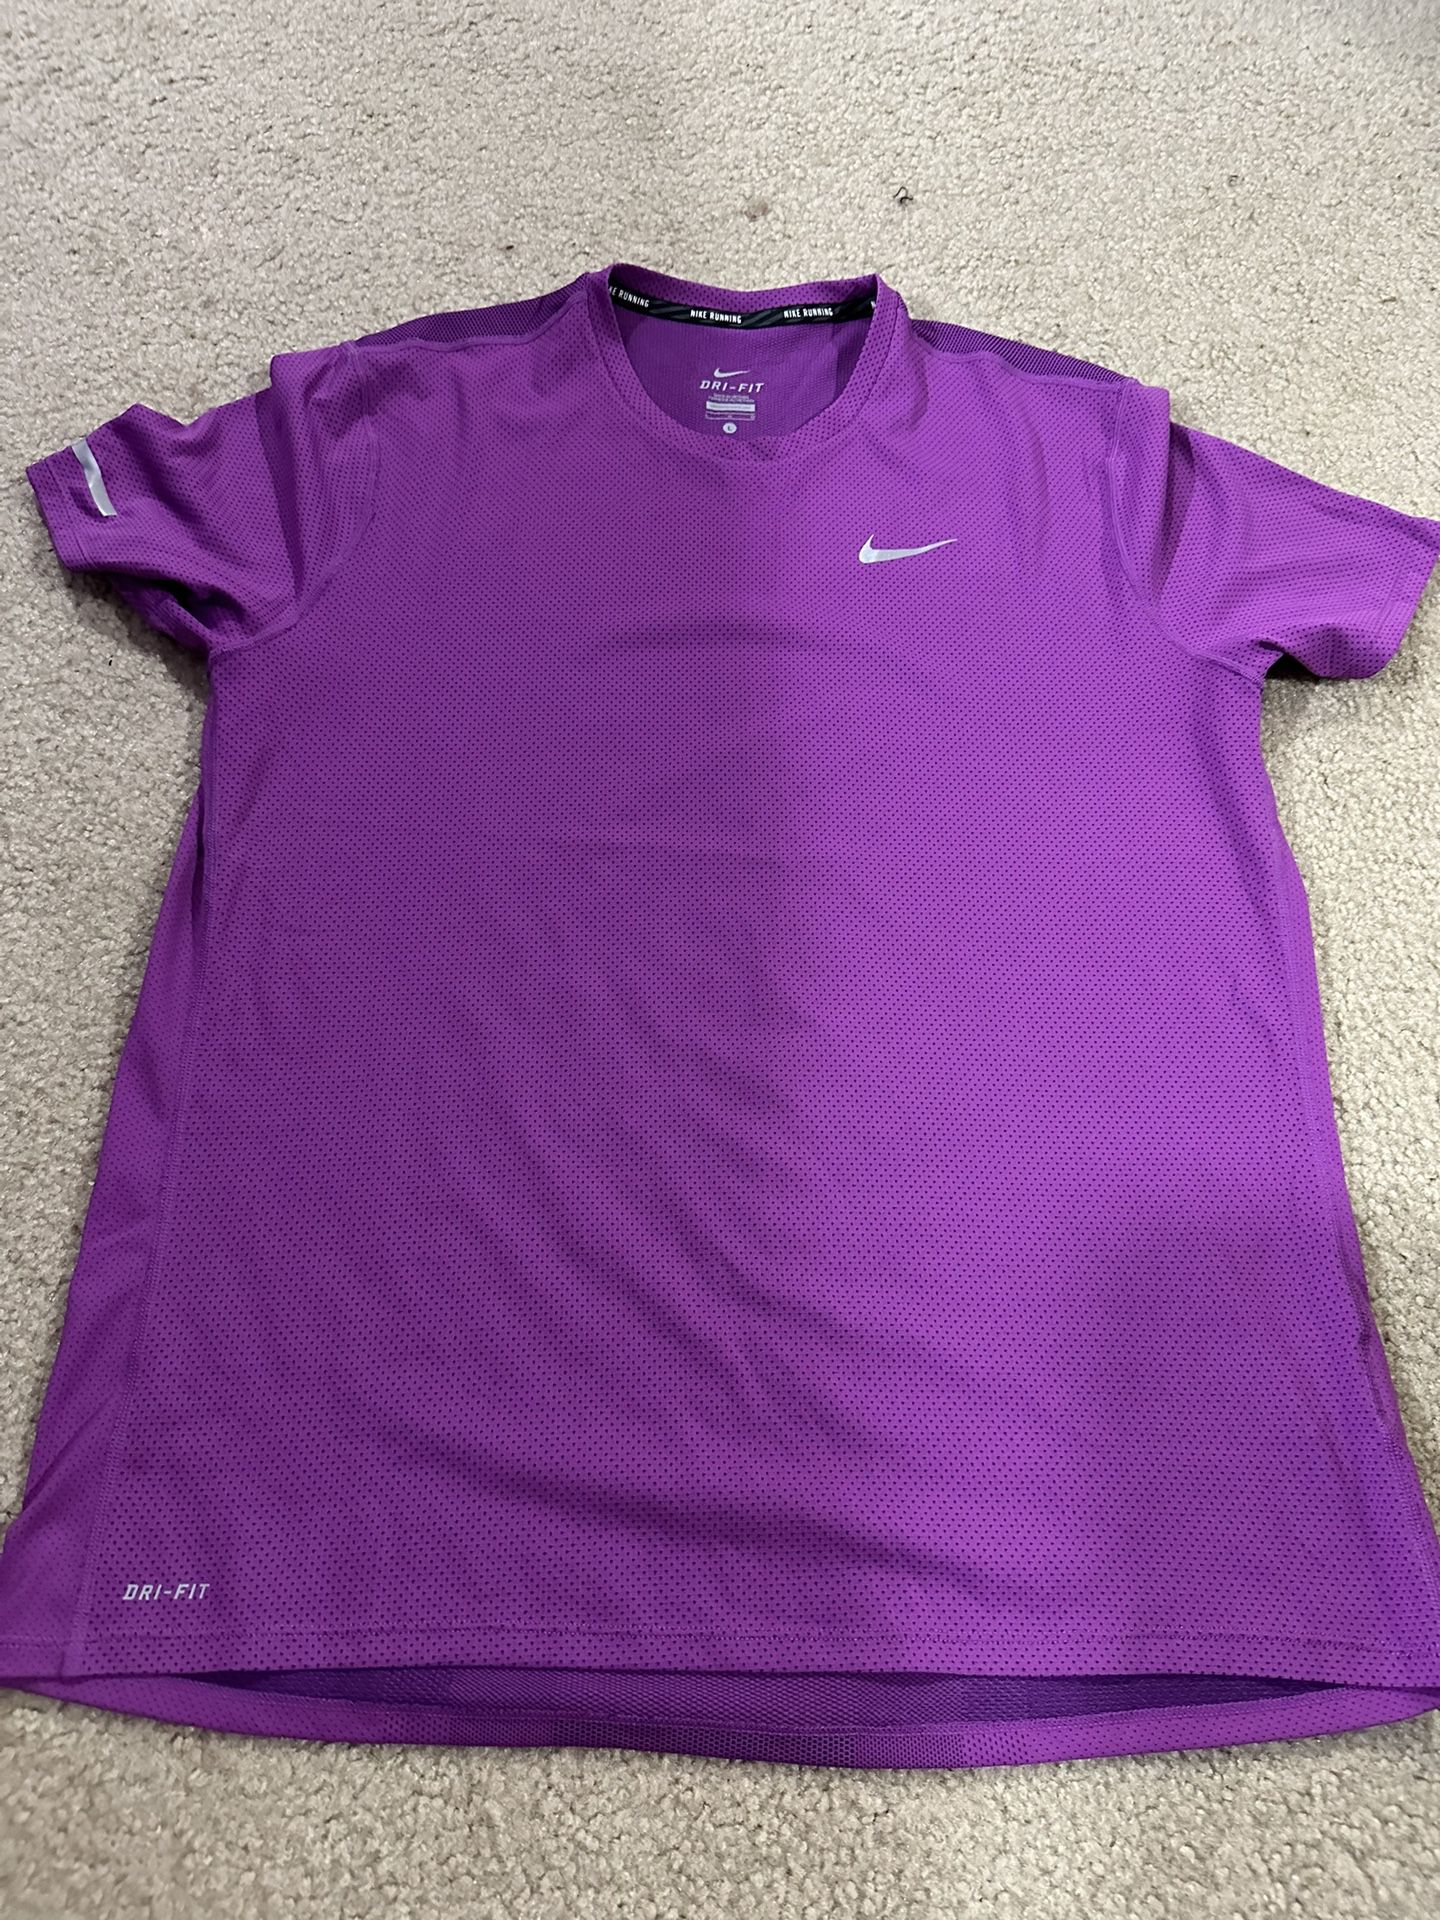 Men’s Purple Nike Tee Shirt